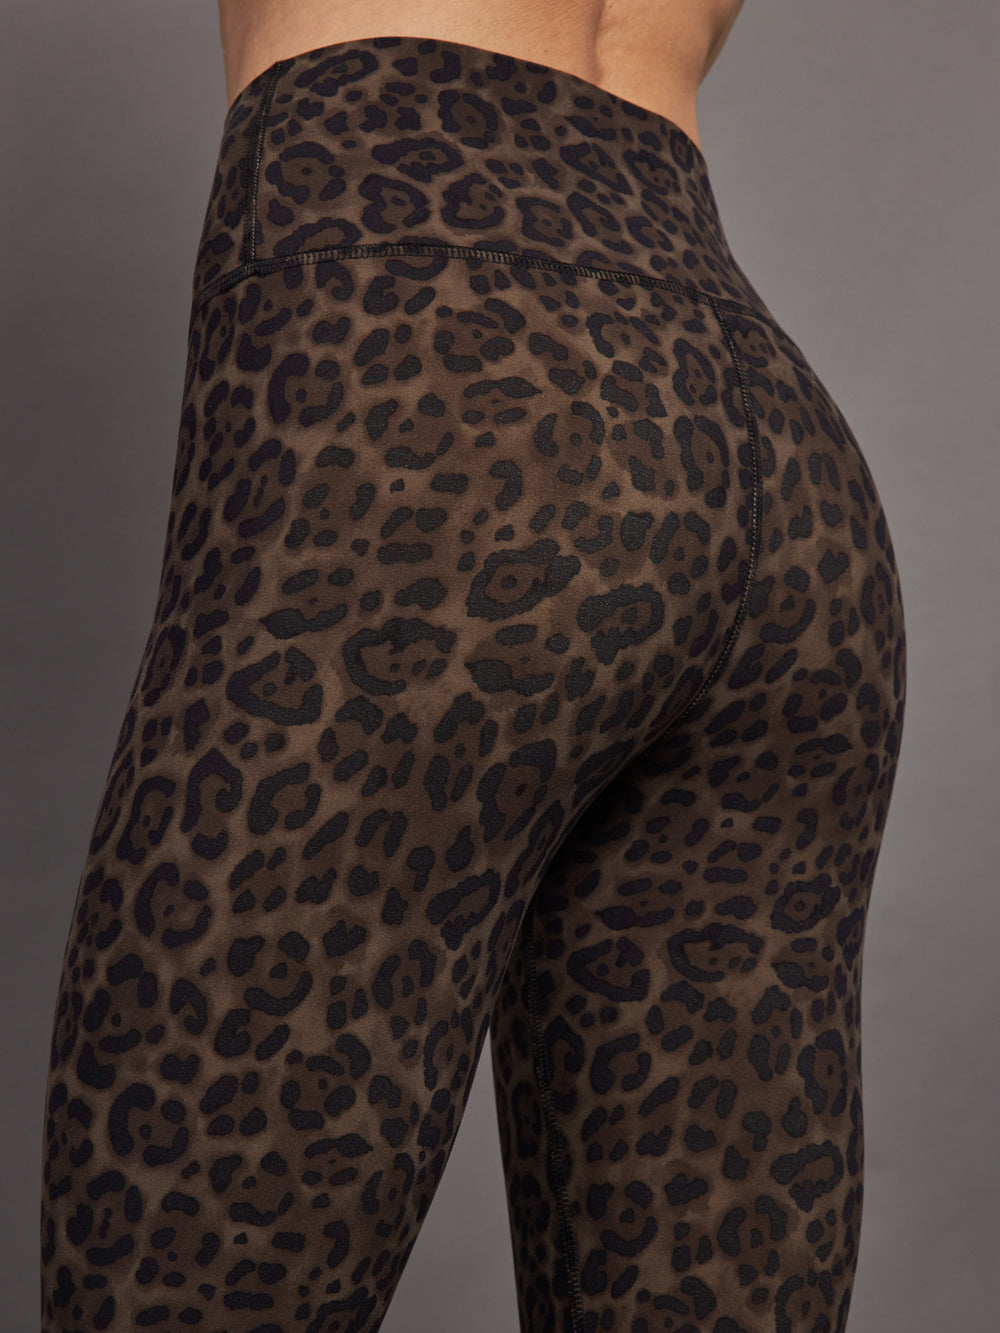 NWOT Alo Yoga High Waist Vapor white Leopard Legging Carbon38 L